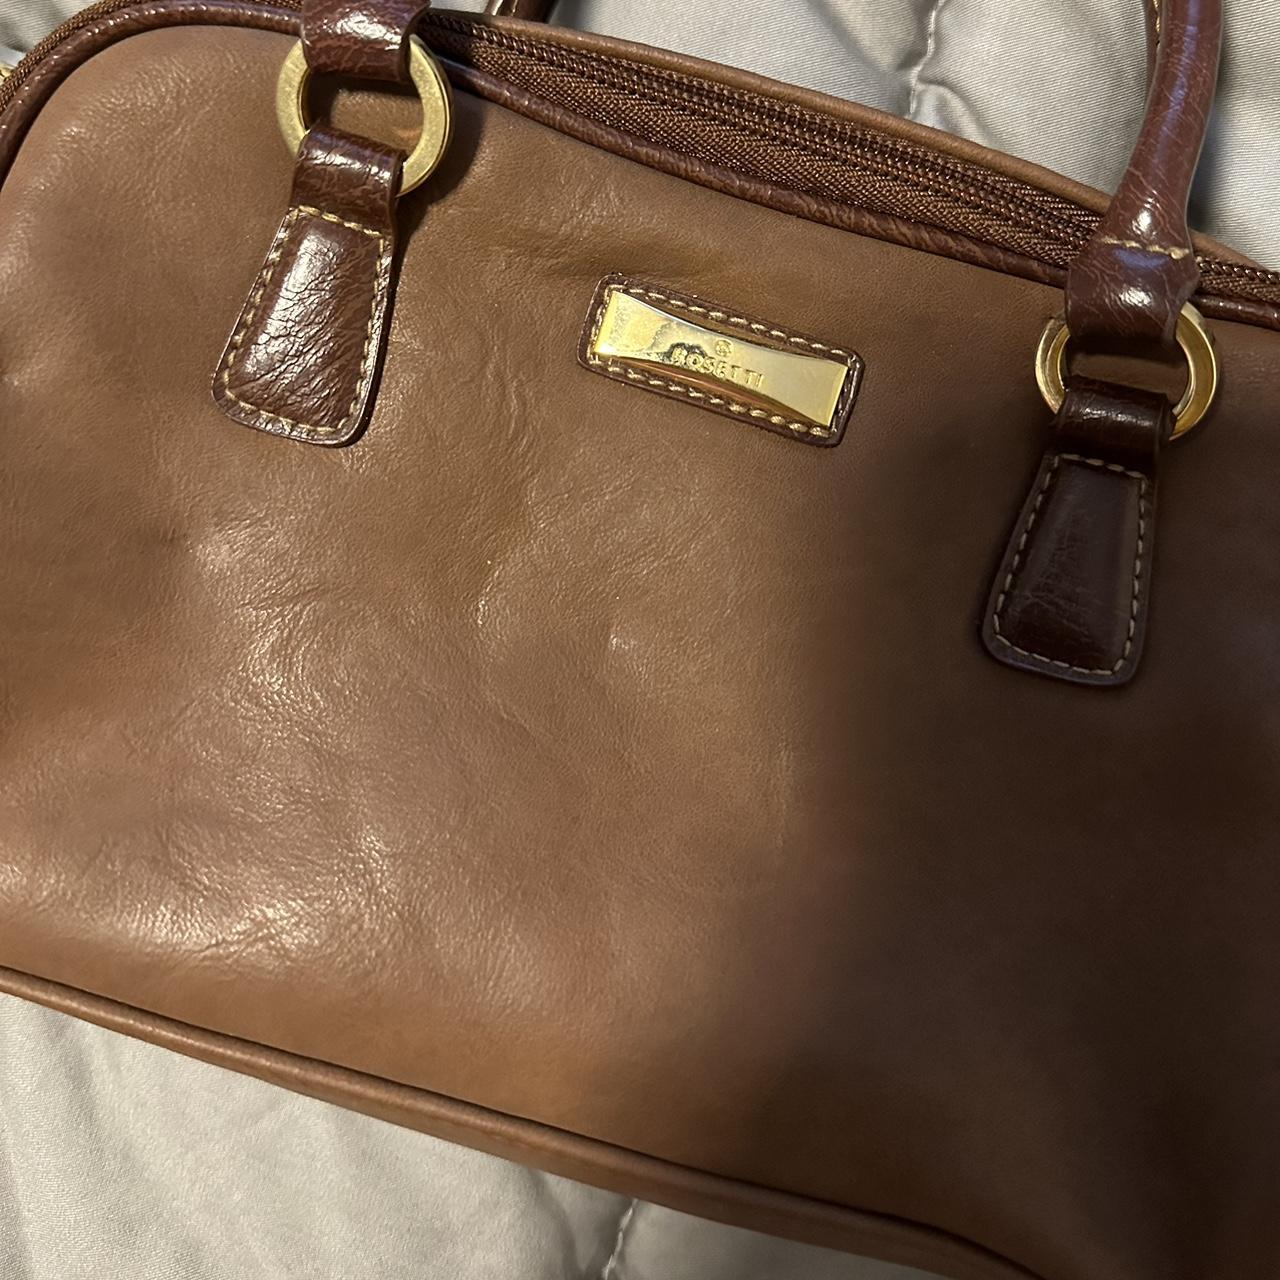 Rosetti Tote Brown Medium Handbag Purse Vintage Good Condition 💼 | eBay